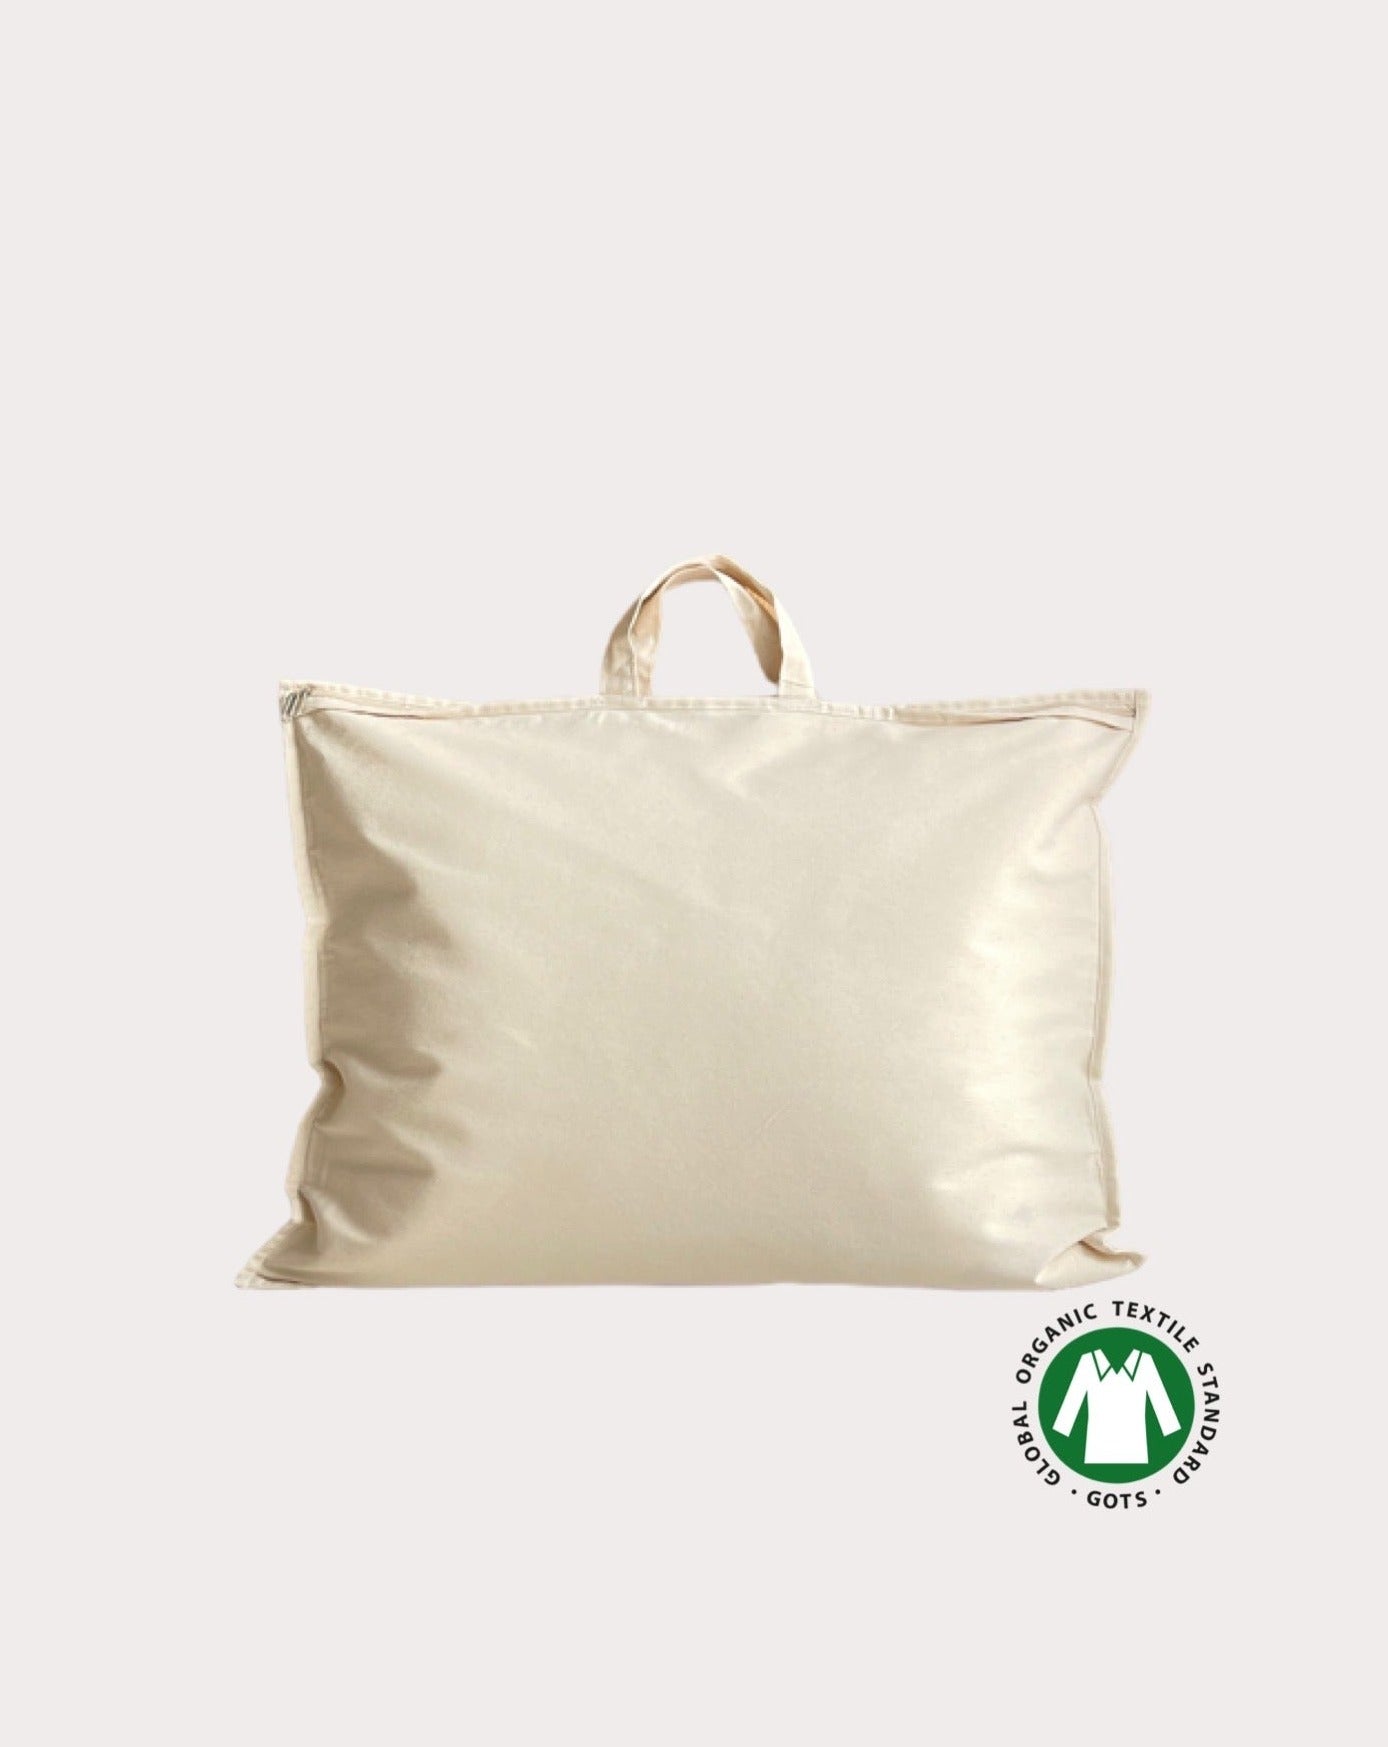 Organic pure wool pillow